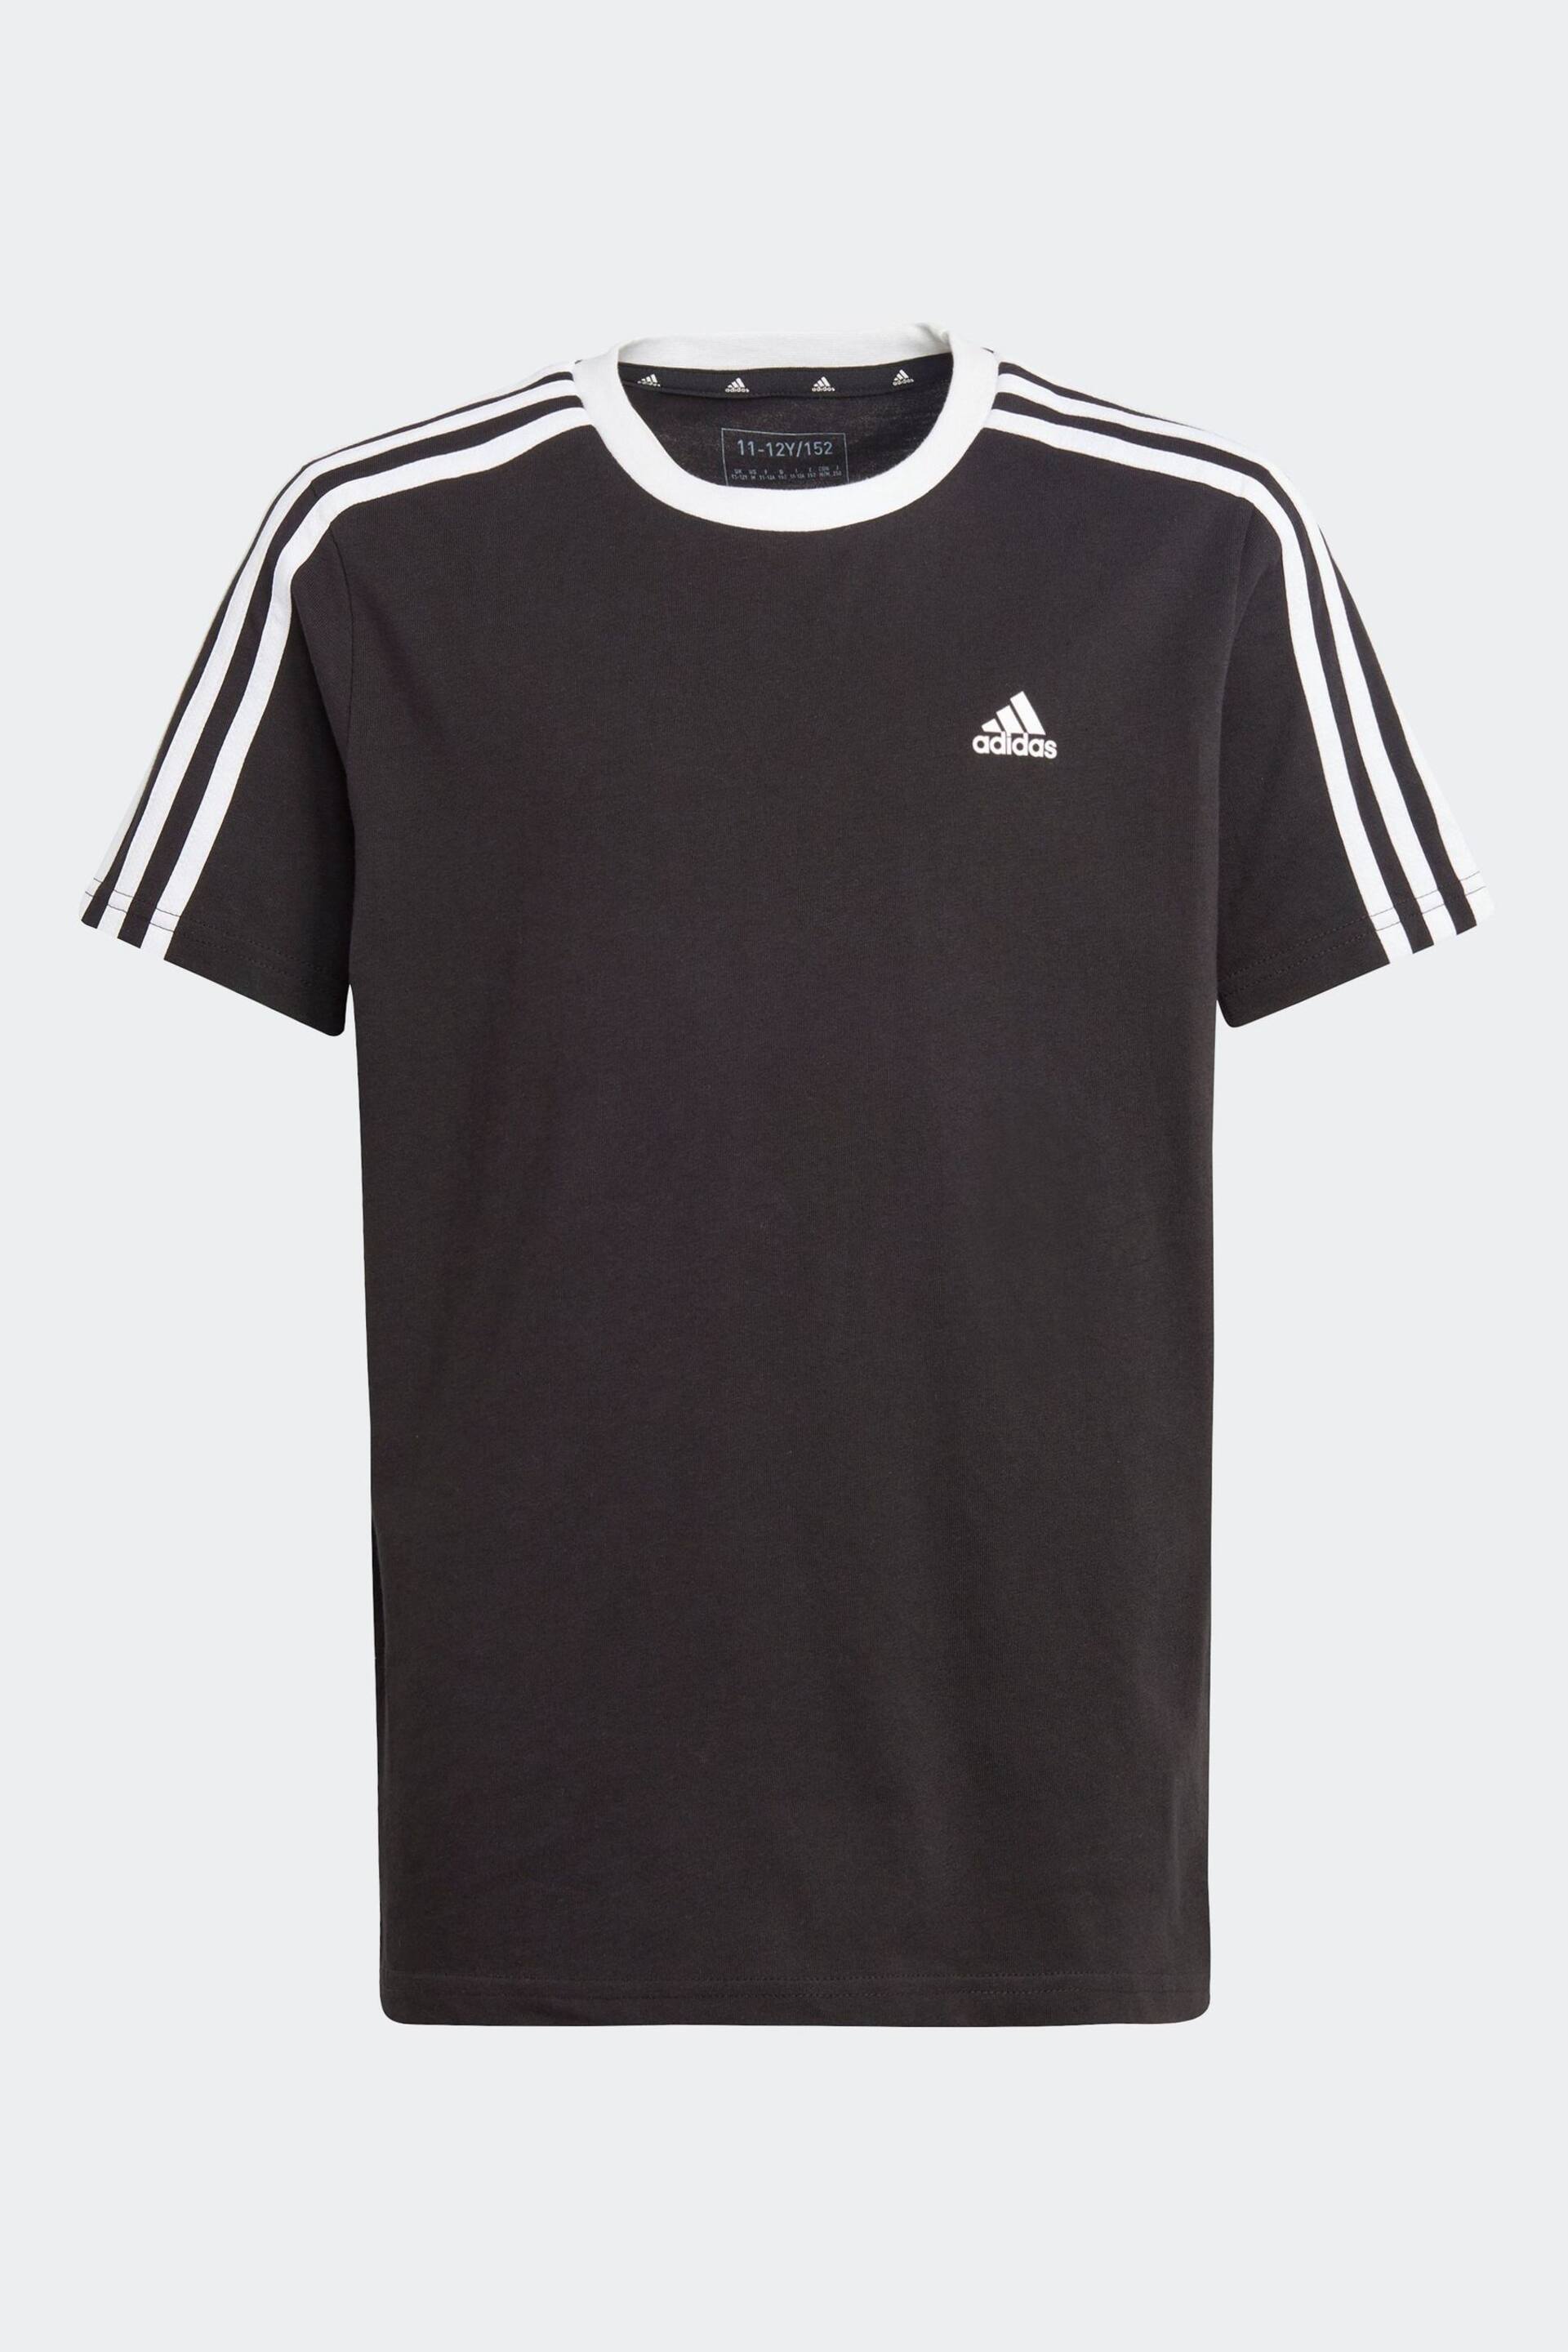 adidas Black Boyfriend Loose Fit Sportswear Essentials 3-Stripes Cotton T-Shirt - Image 1 of 6